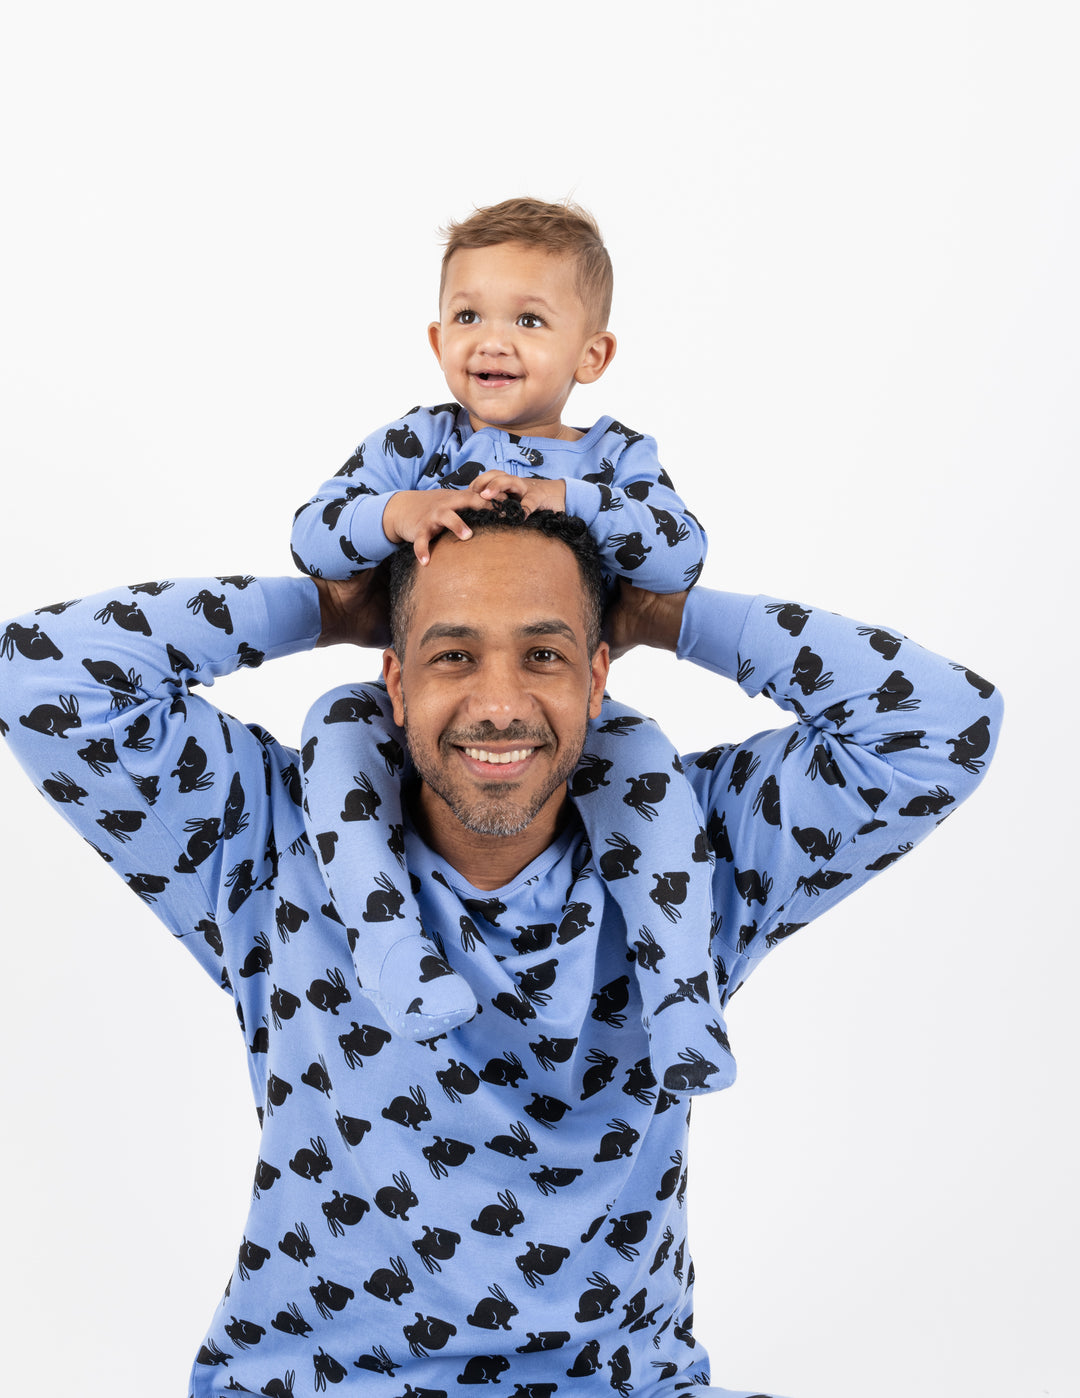 dad and baby wearing matching blue bunny pajamas